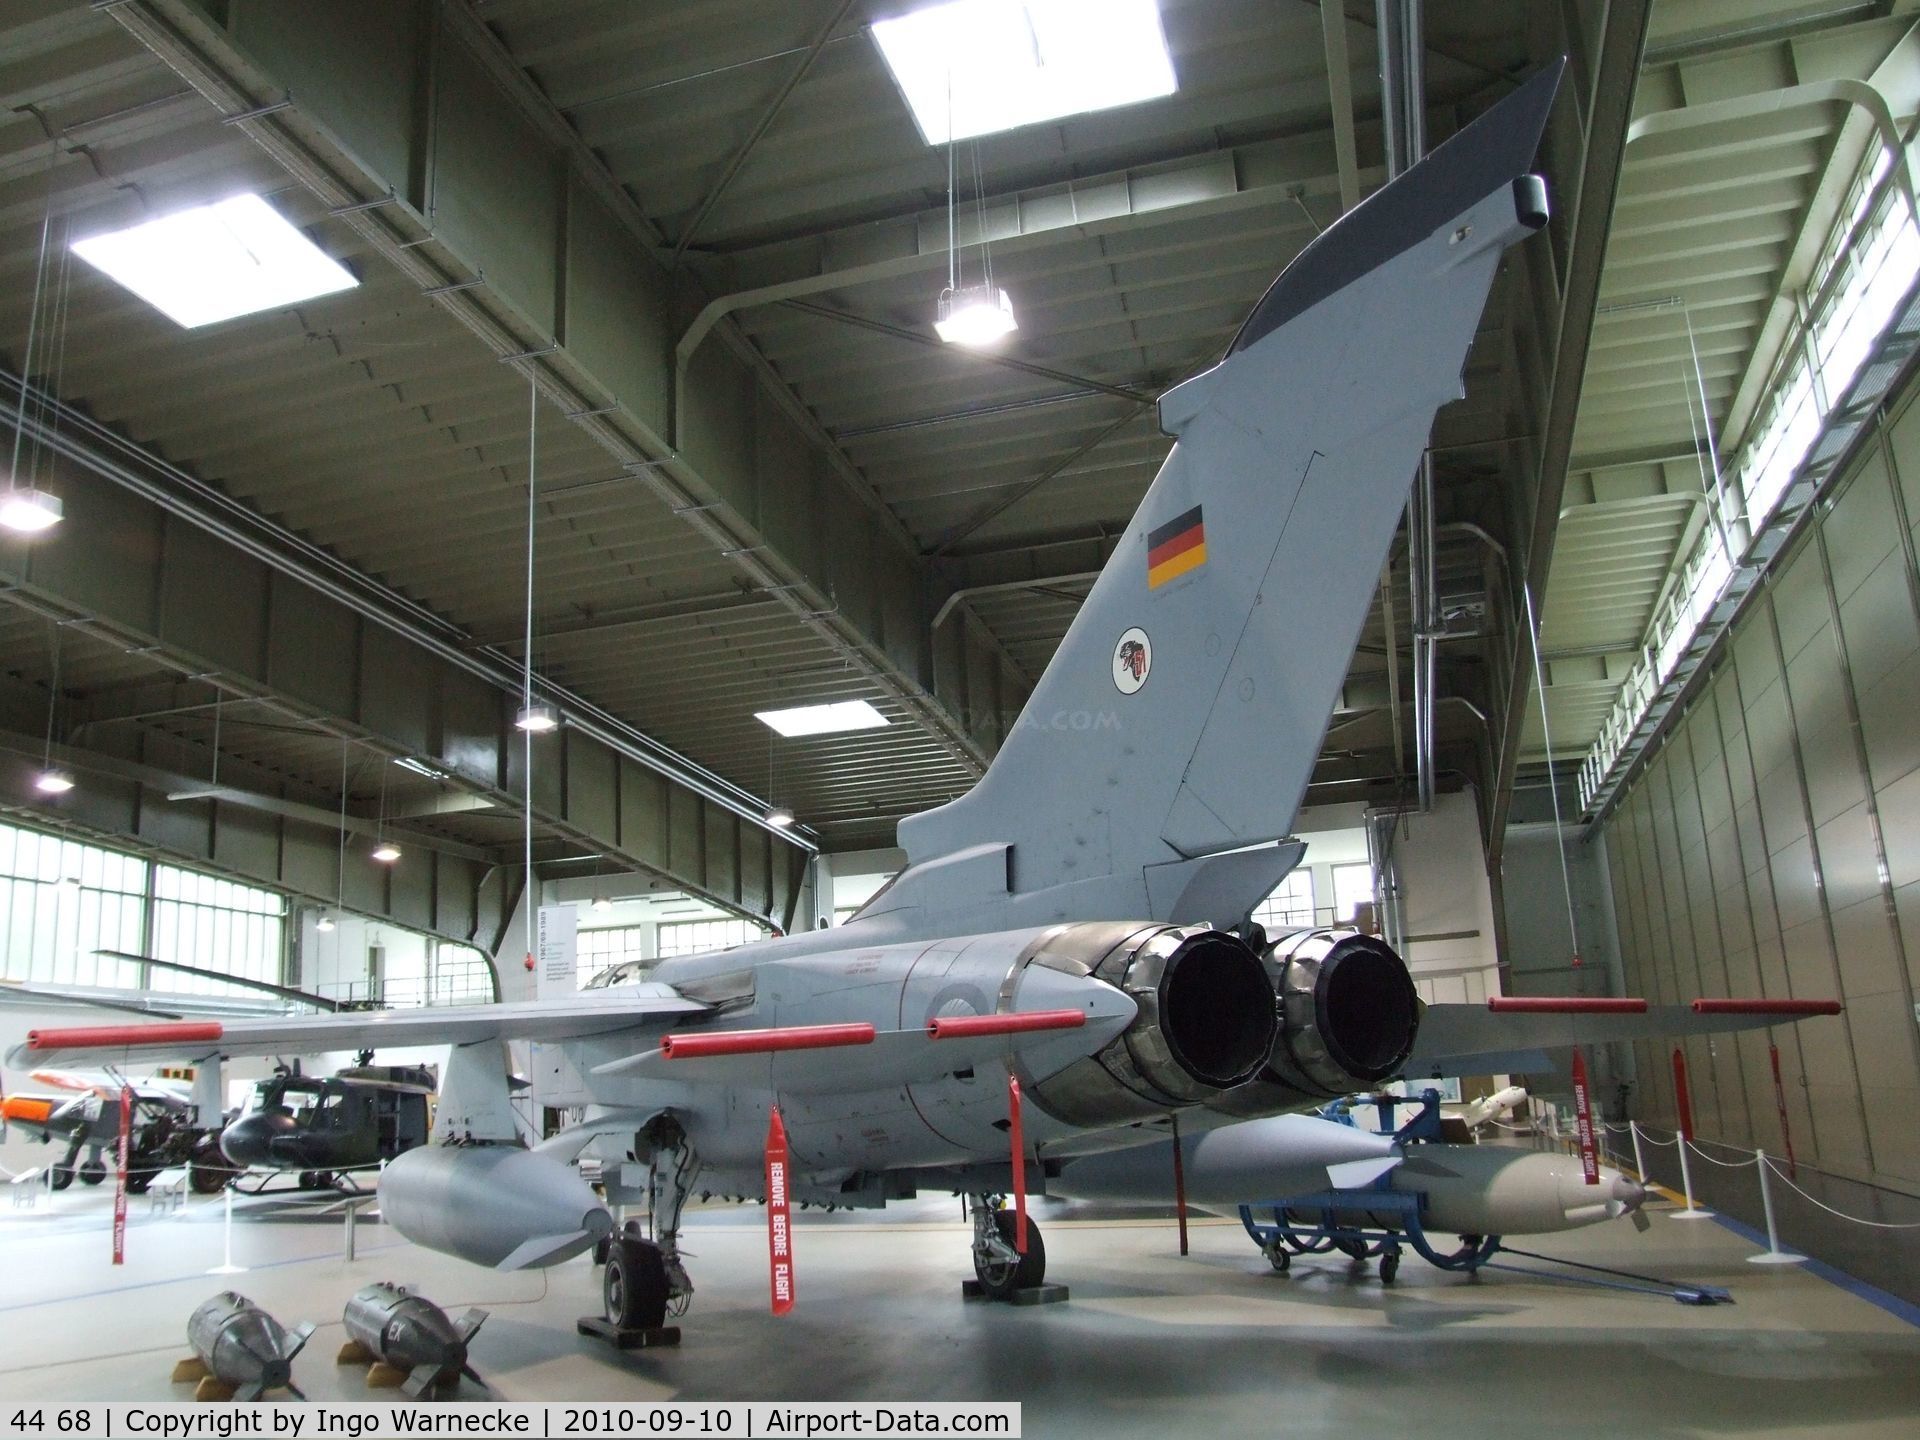 44 68, Panavia Tornado IDS C/N 425/GS125/4168, Panavia Tornado IDS at the Luftwaffenmuseum, Berlin-Gatow